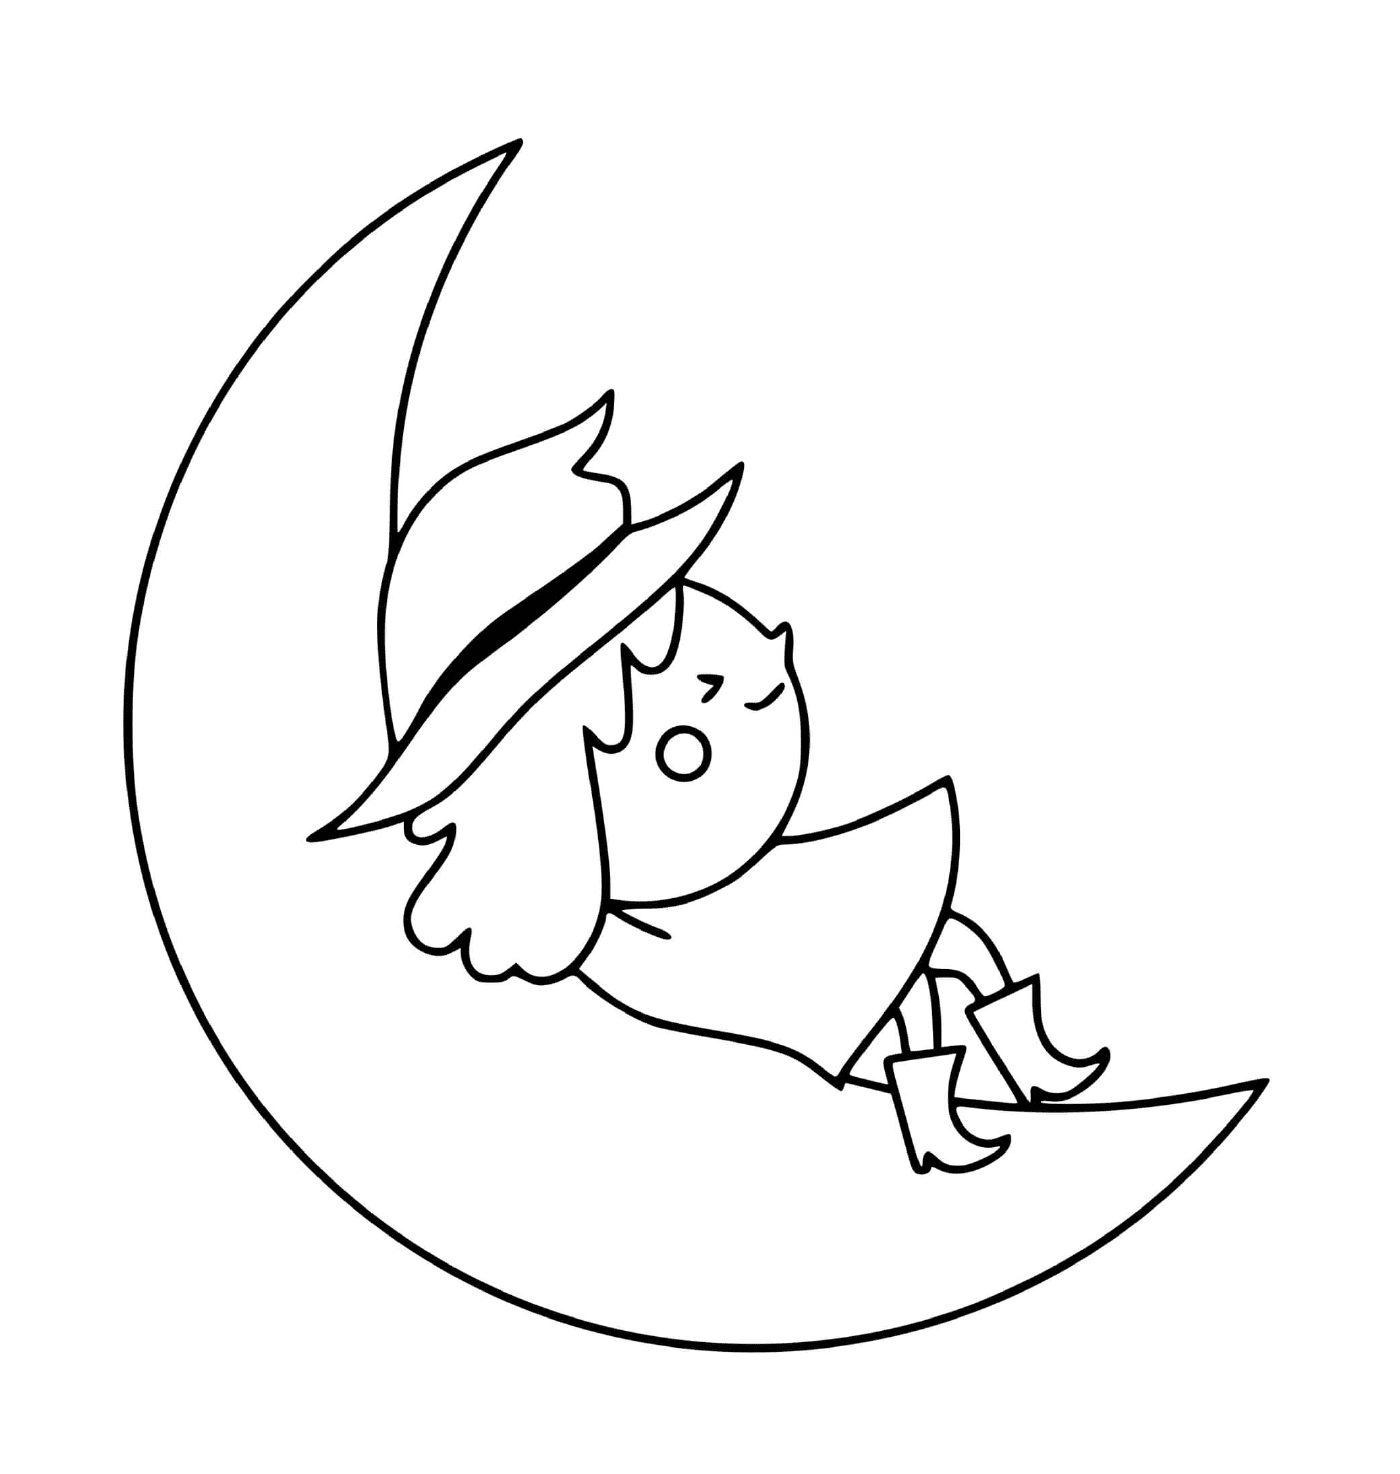 sorciere se repose sur la lune